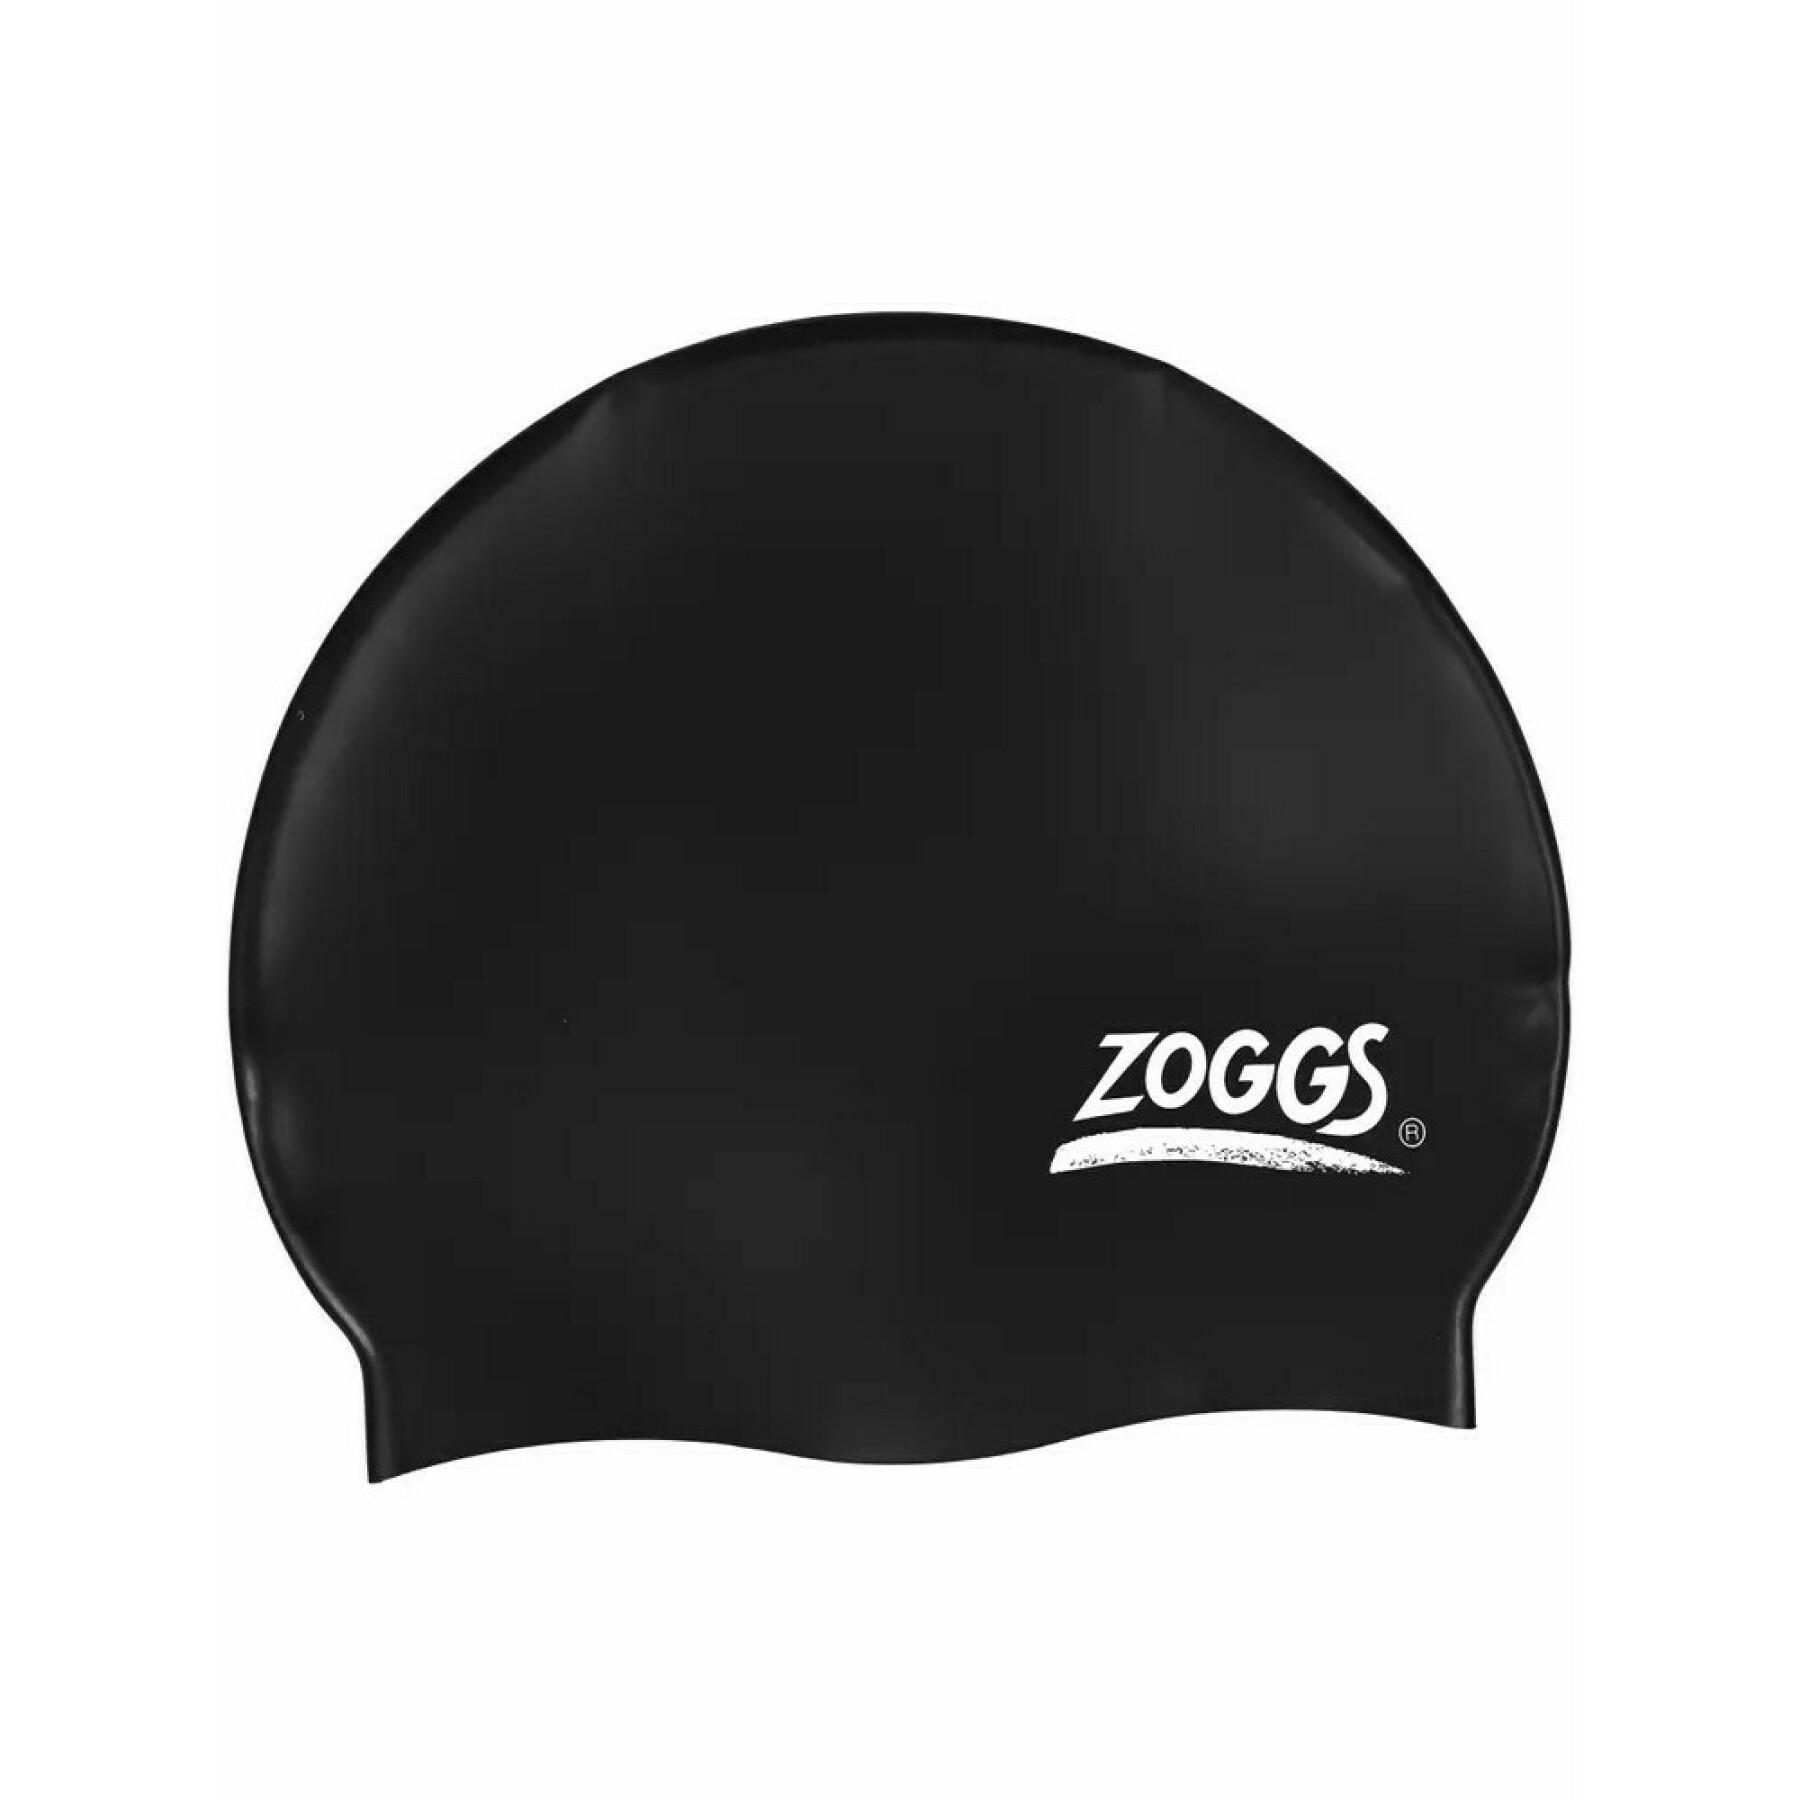 Bathing cap Zoggs